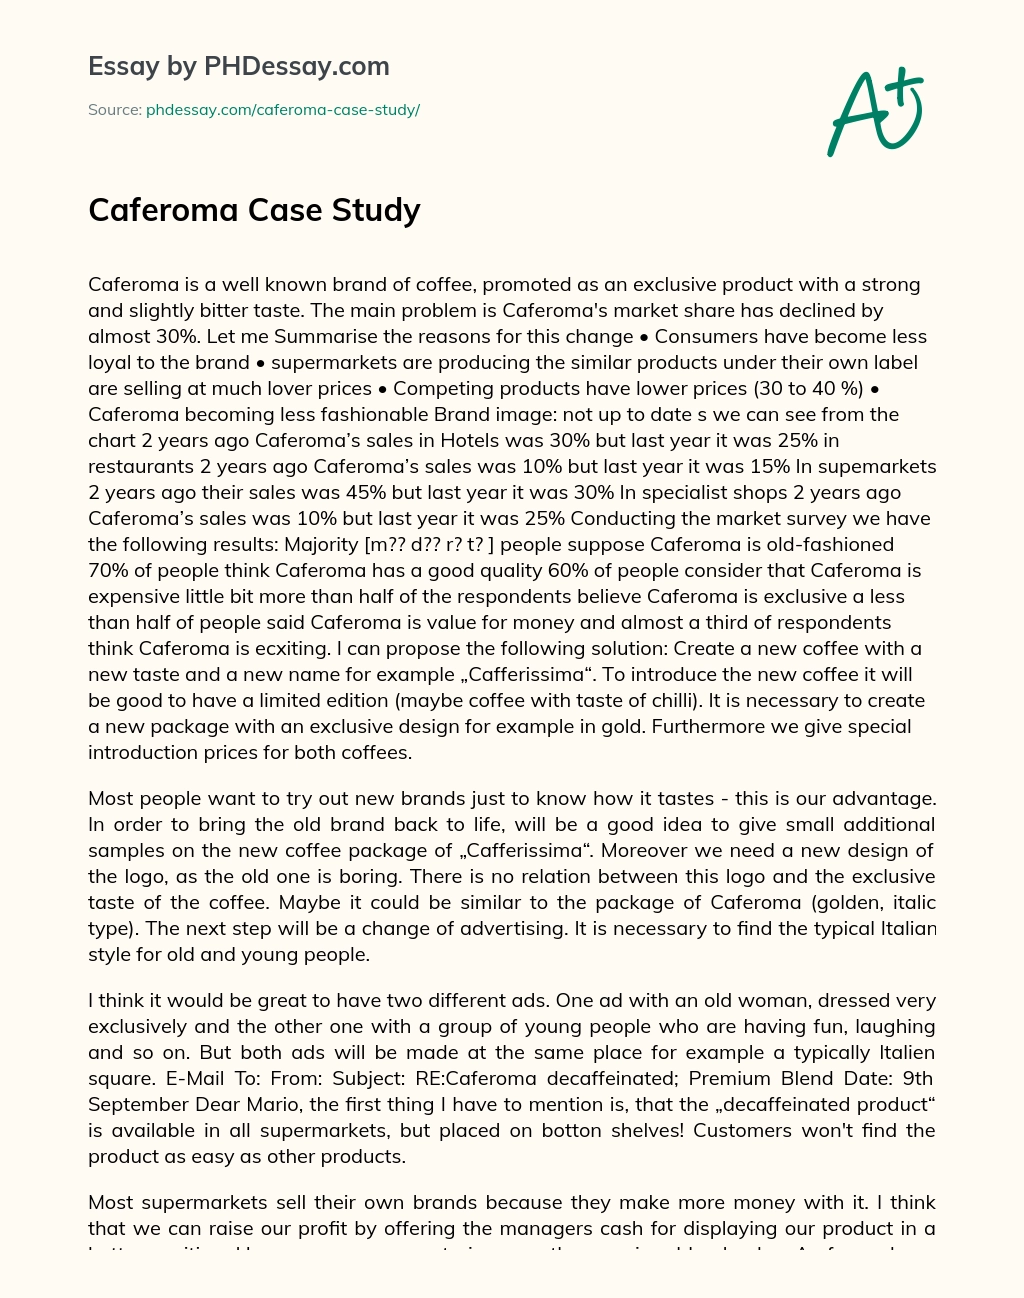 Caferoma Case Study essay